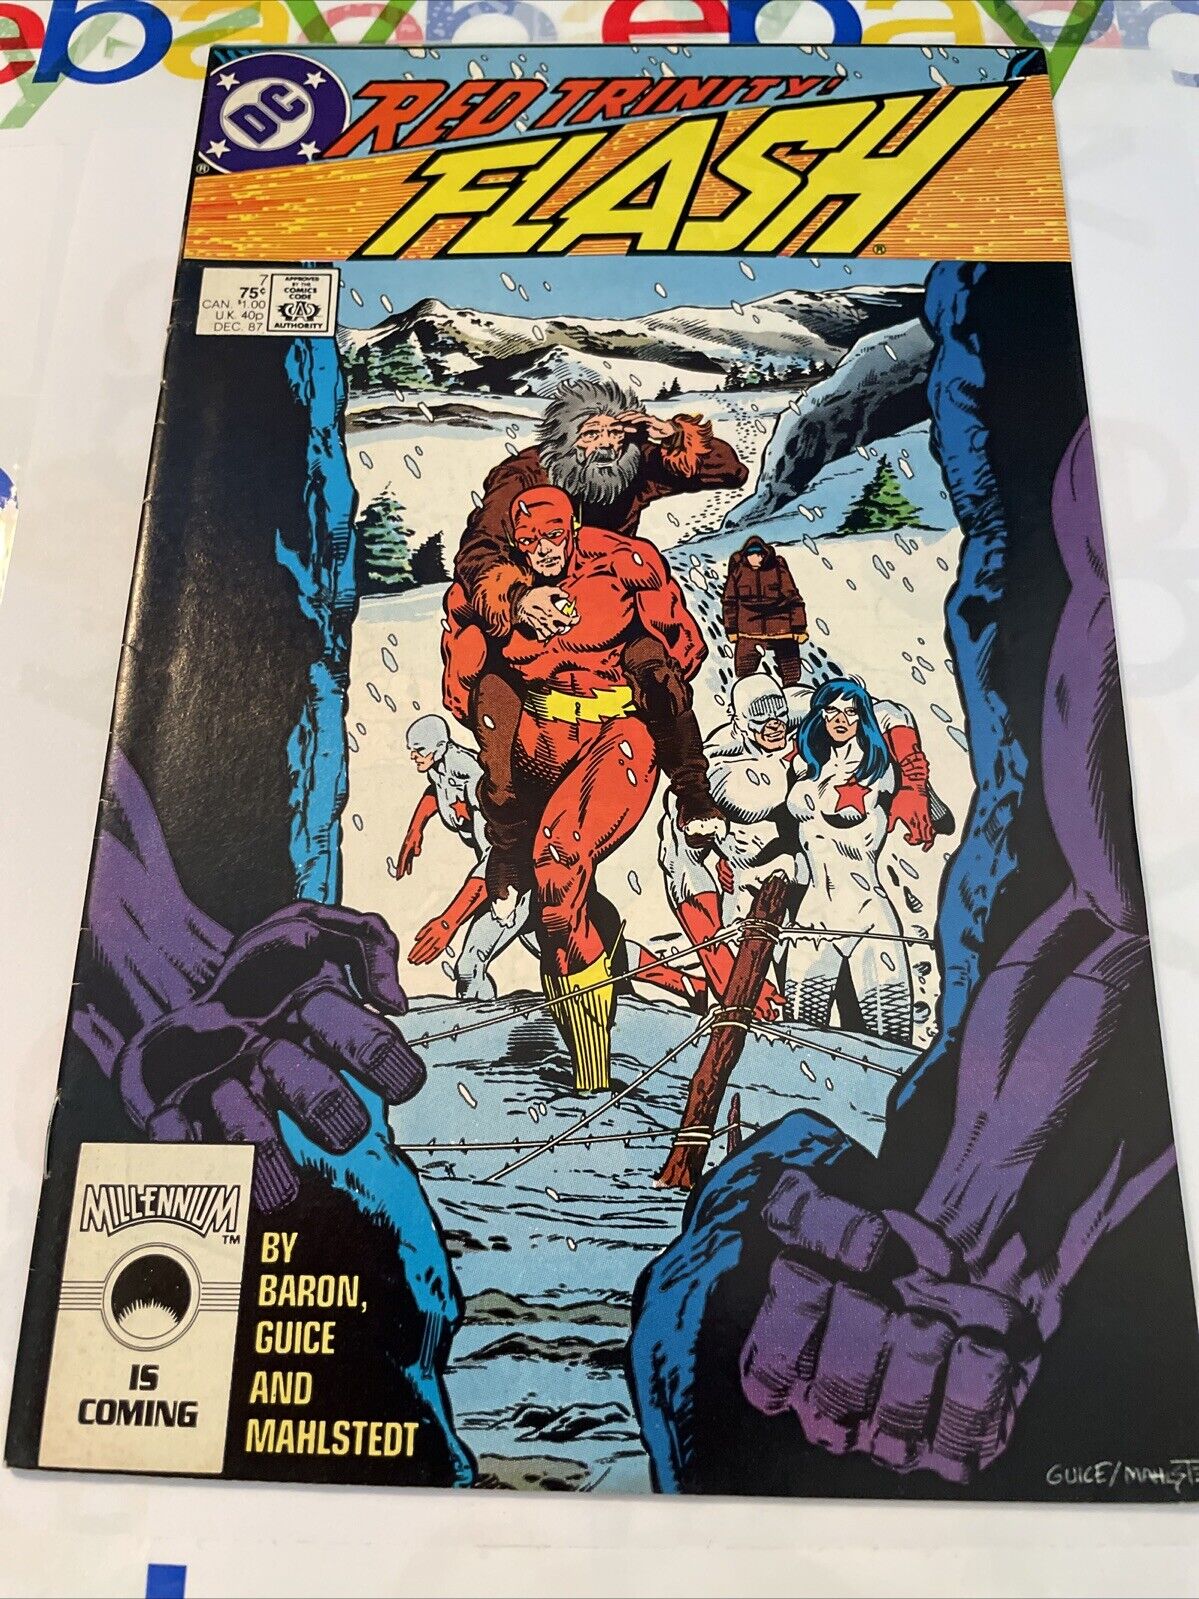 1987 #7 DC Flash Red Trinity Comic Book